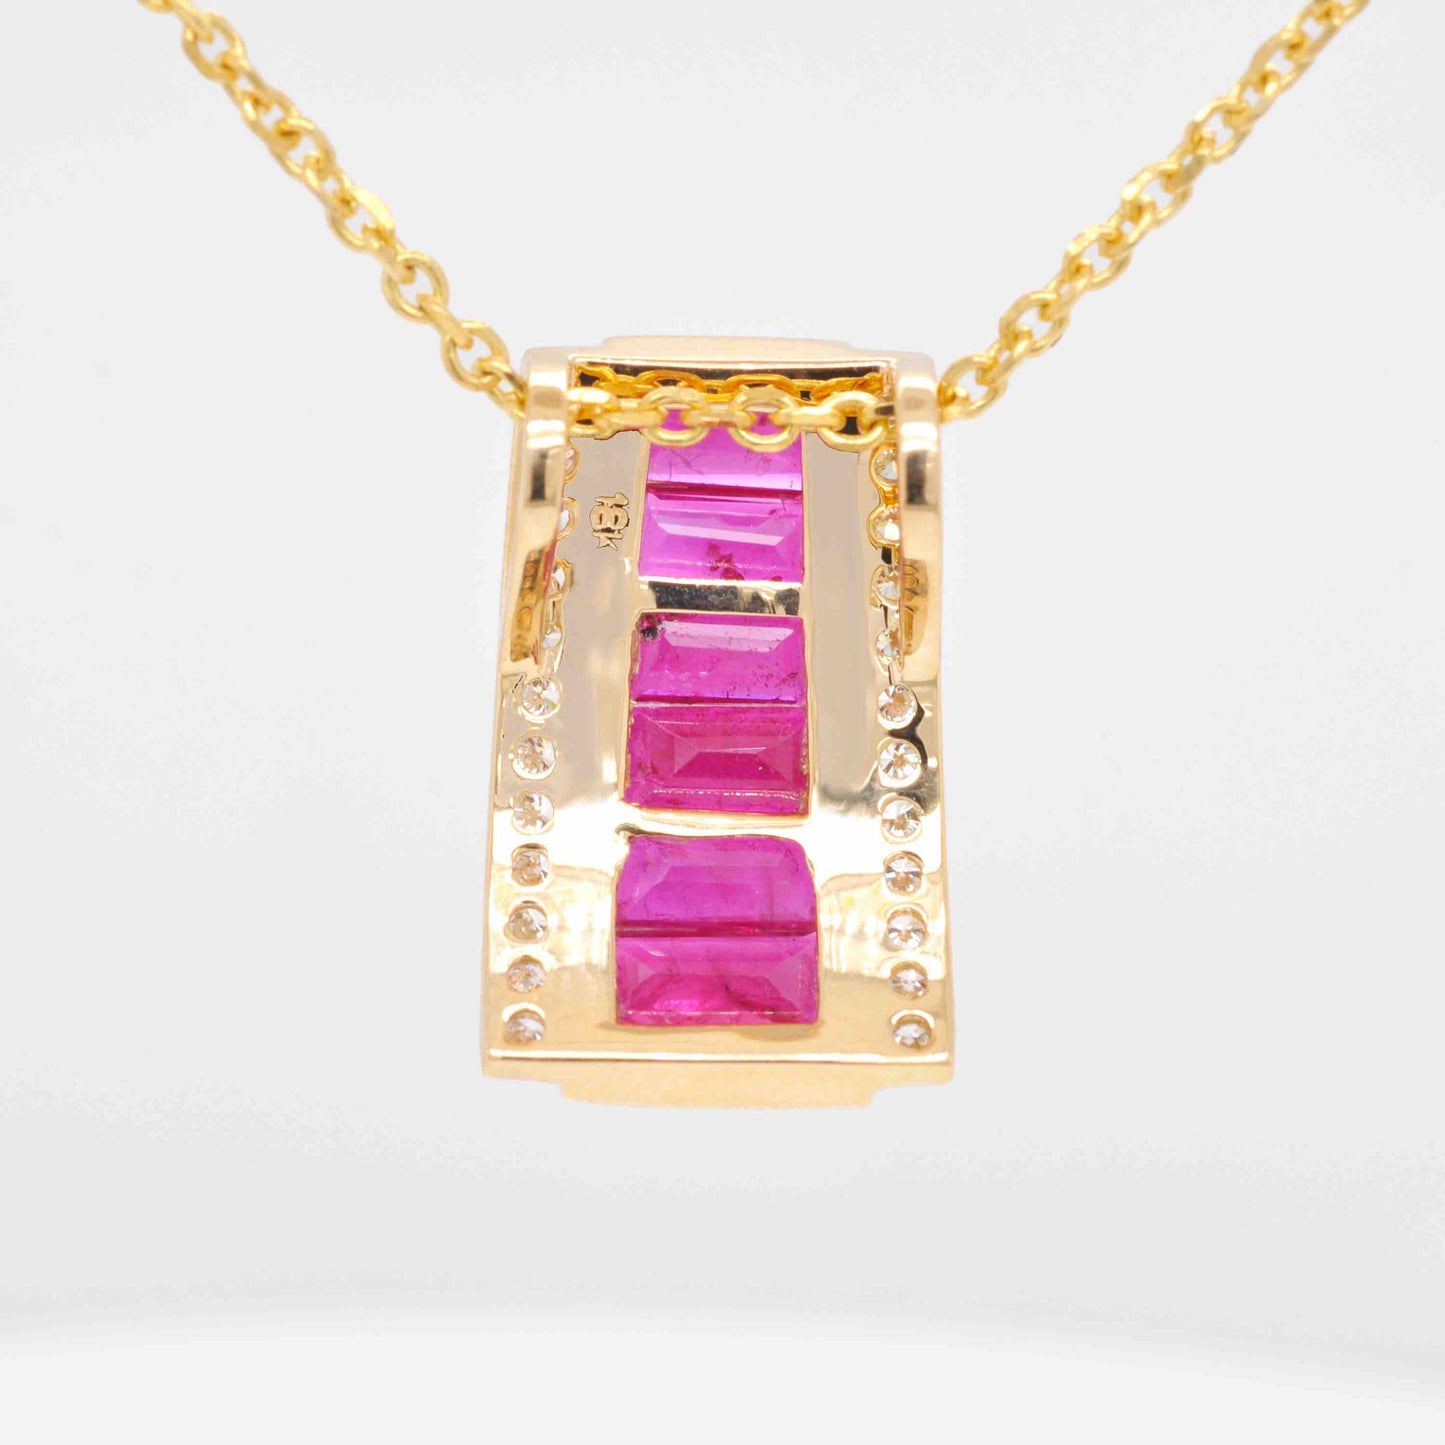 18K Gold Ruby Art Deco Pyramid Diamond Pendant Necklace - Vaibhav Dhadda Jewelry